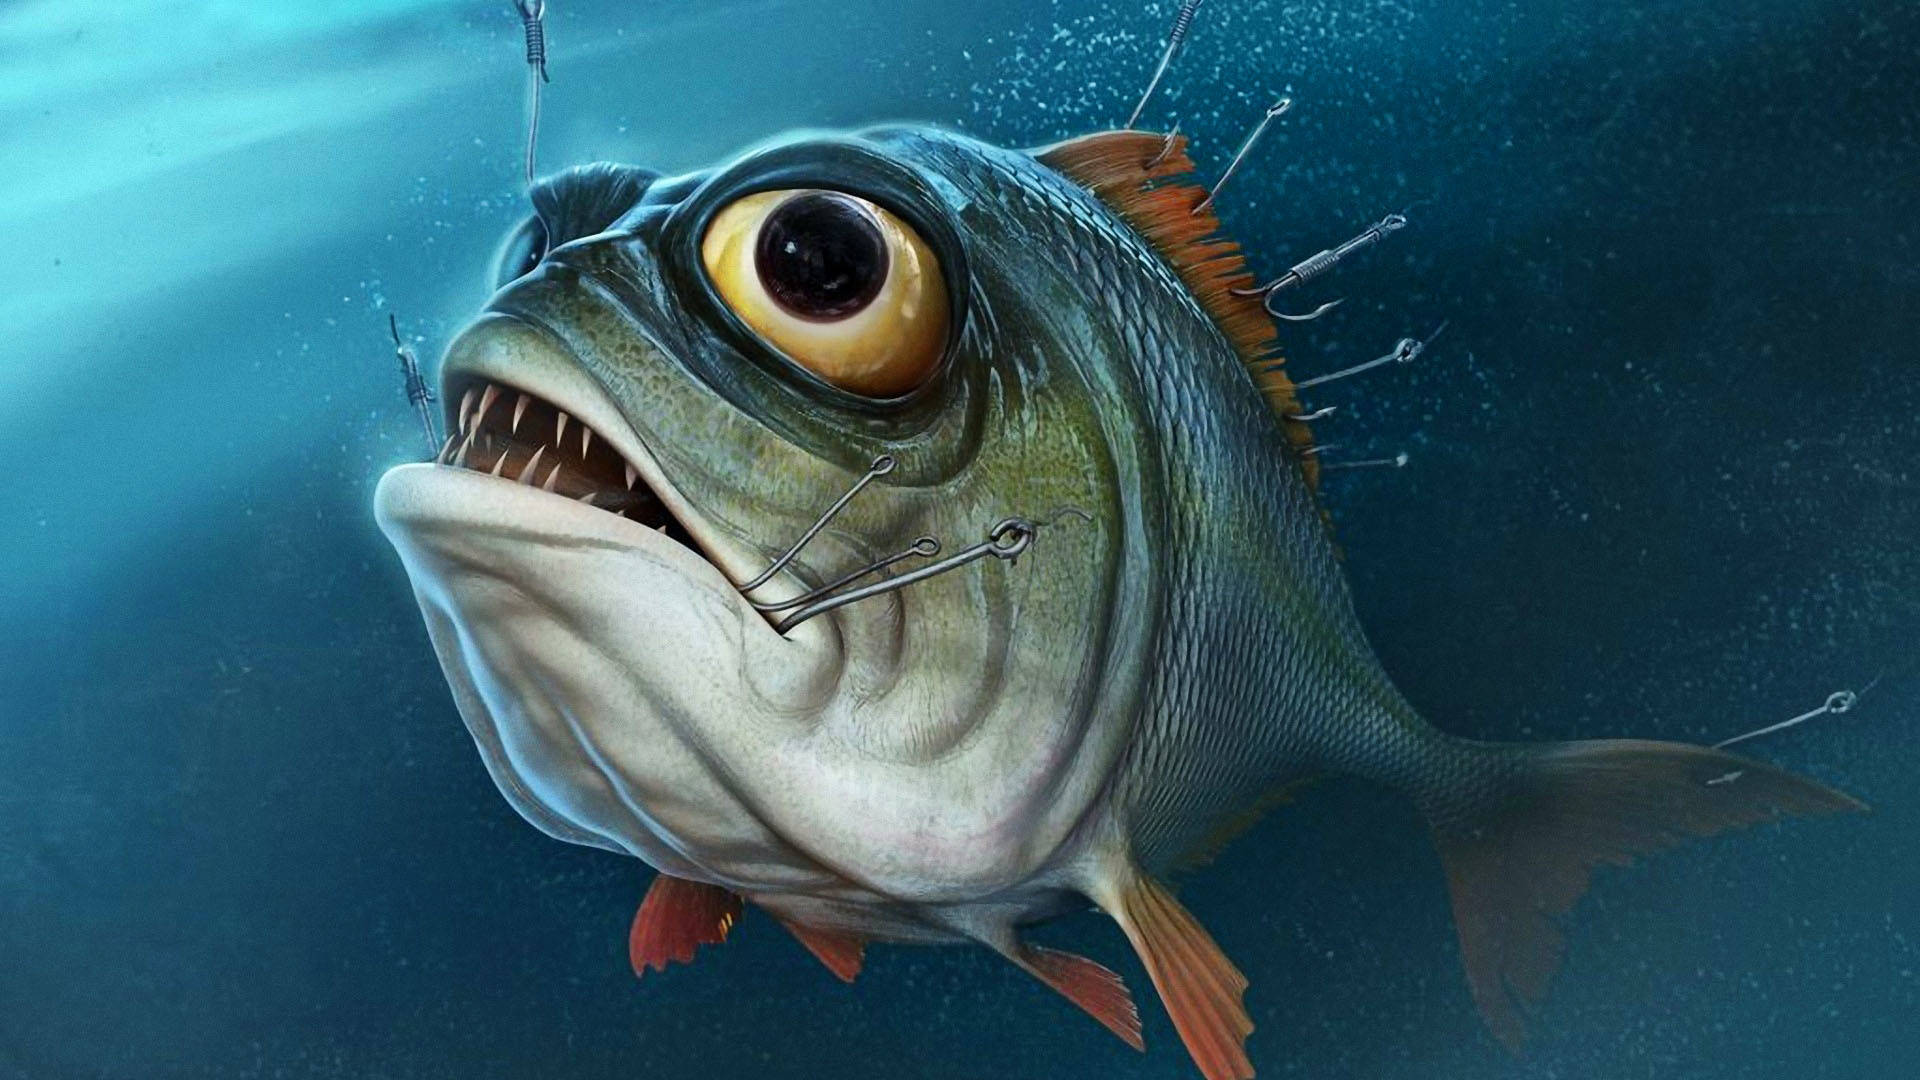 bass fish wallpaper hd